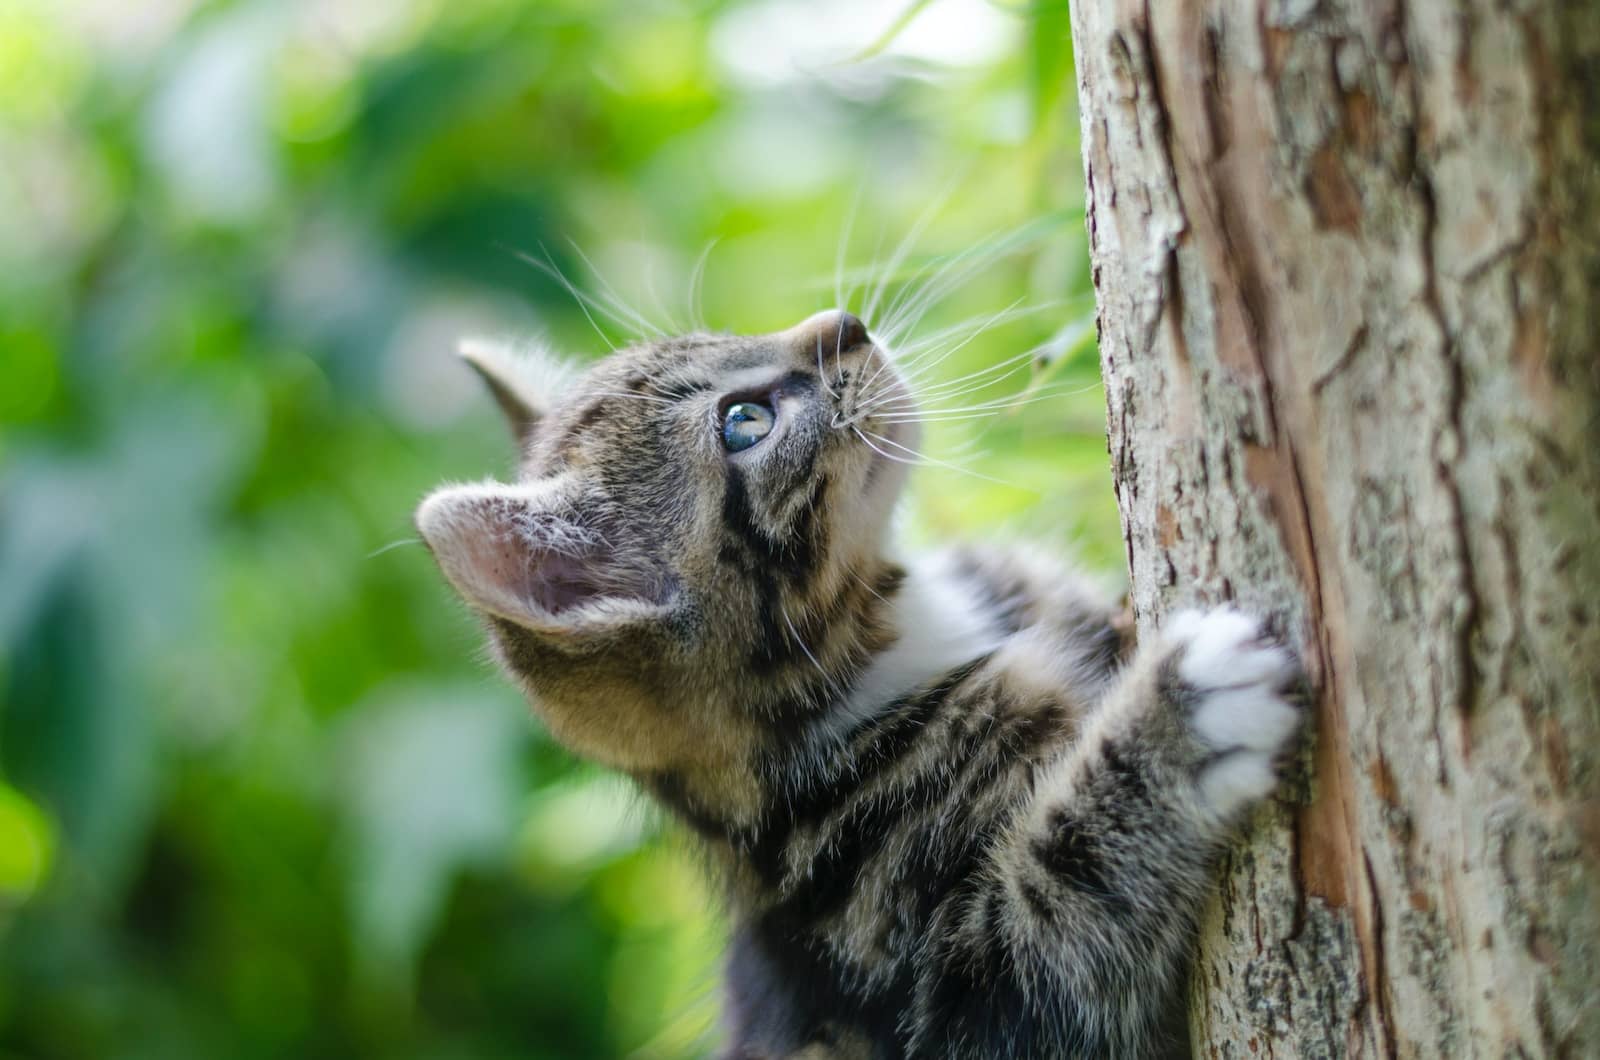 selective focus photography of gray tabby kitten climbing a tree